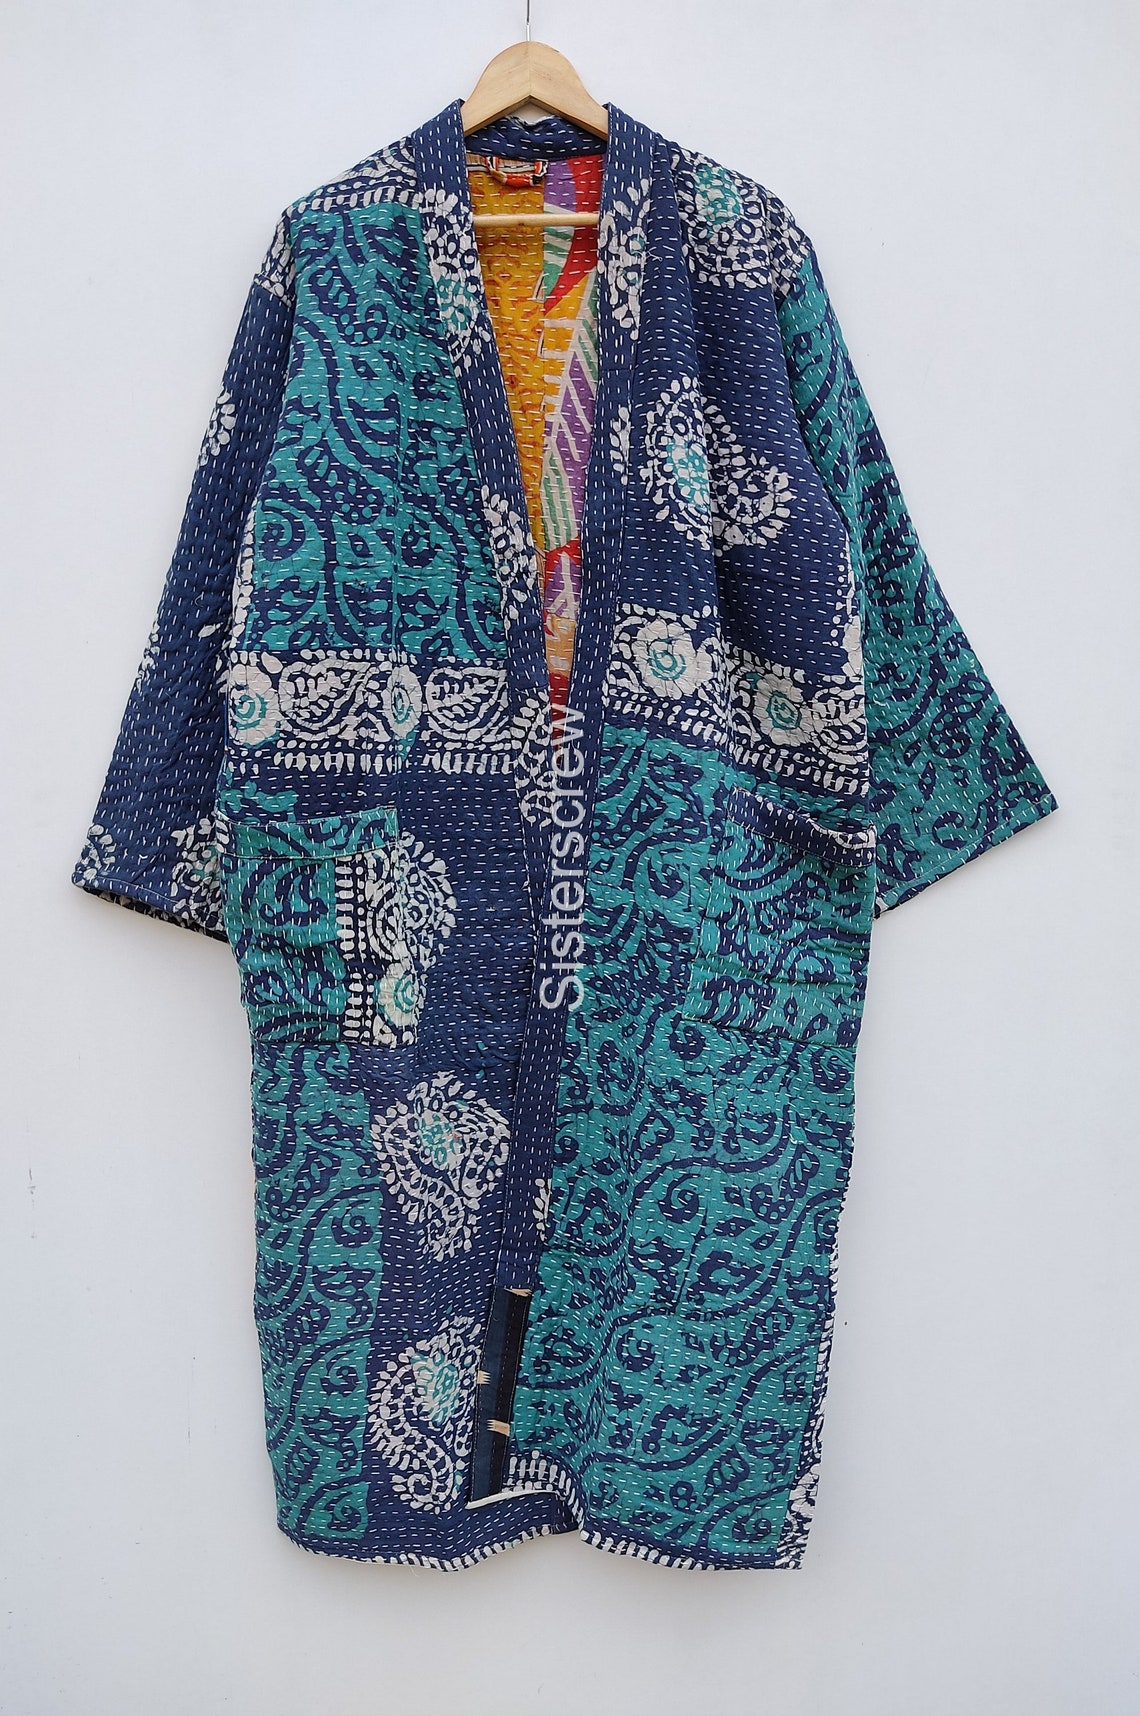 EXPRESS DELIVERY Vintage Kantha Quilted Jacket Reversible | Etsy